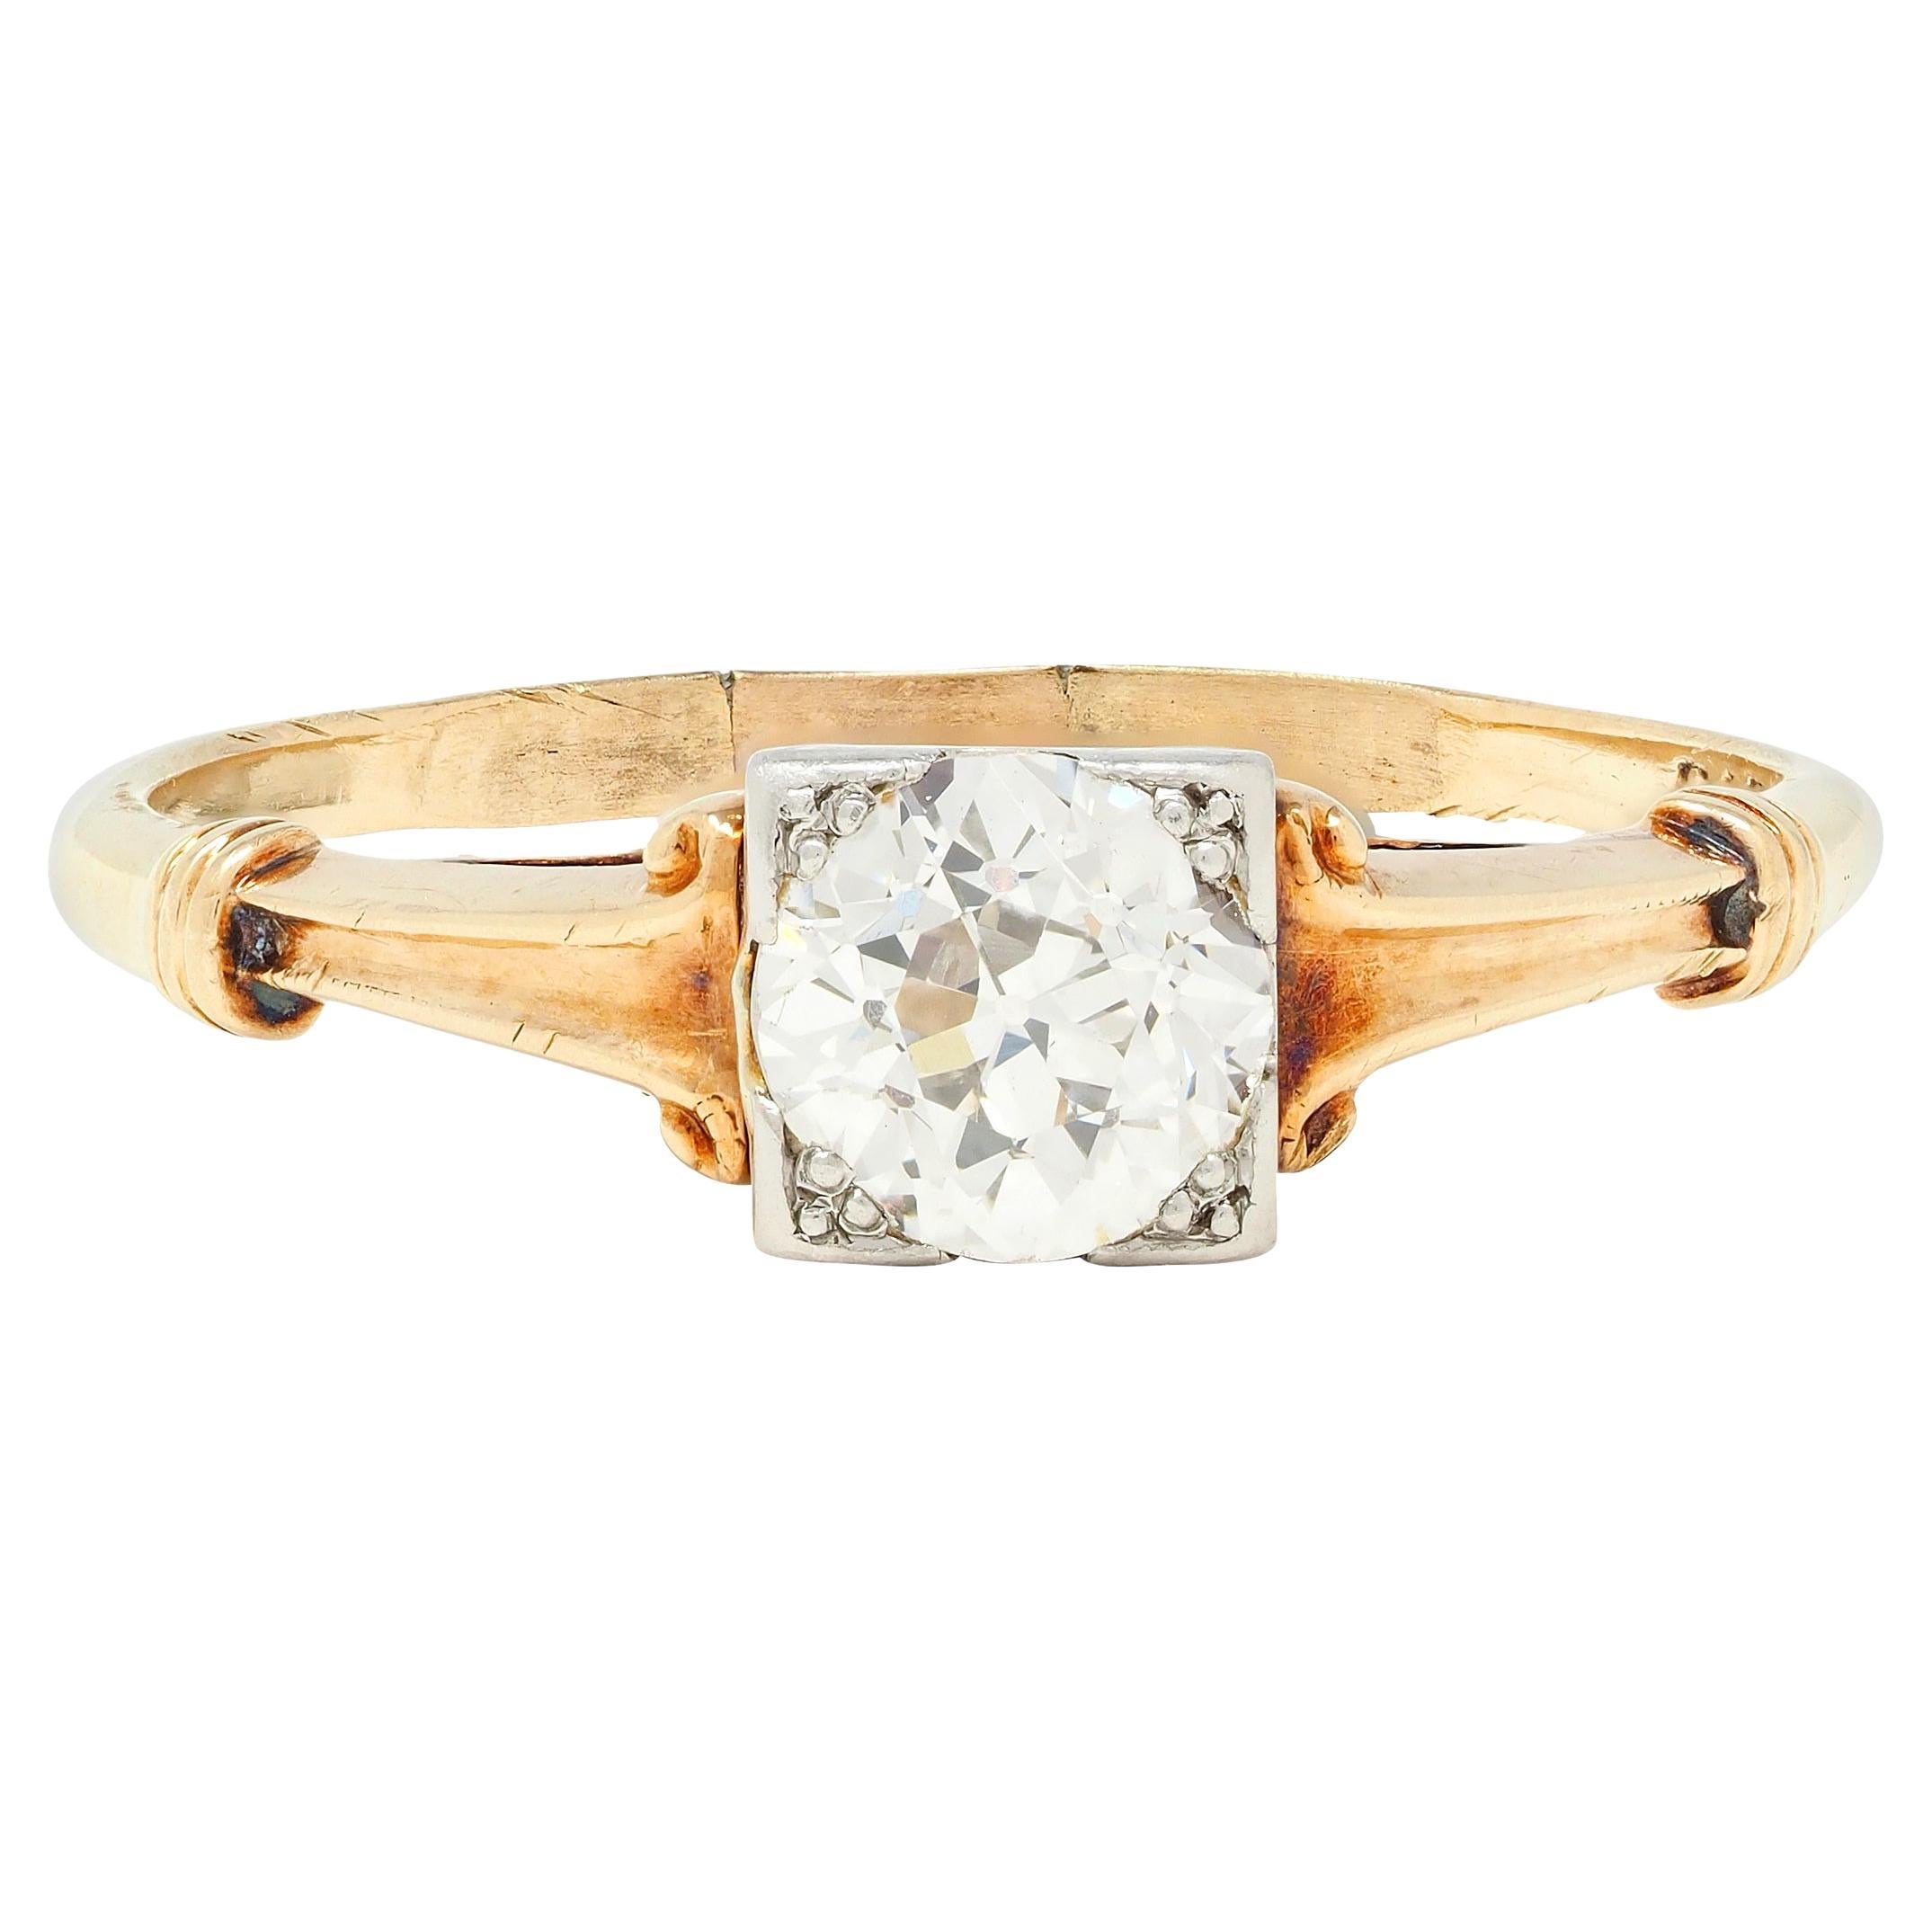 Brogan Co. Edwardian 0.70 CTW Platinum 14 Karat Gold Antique Engagement Ring